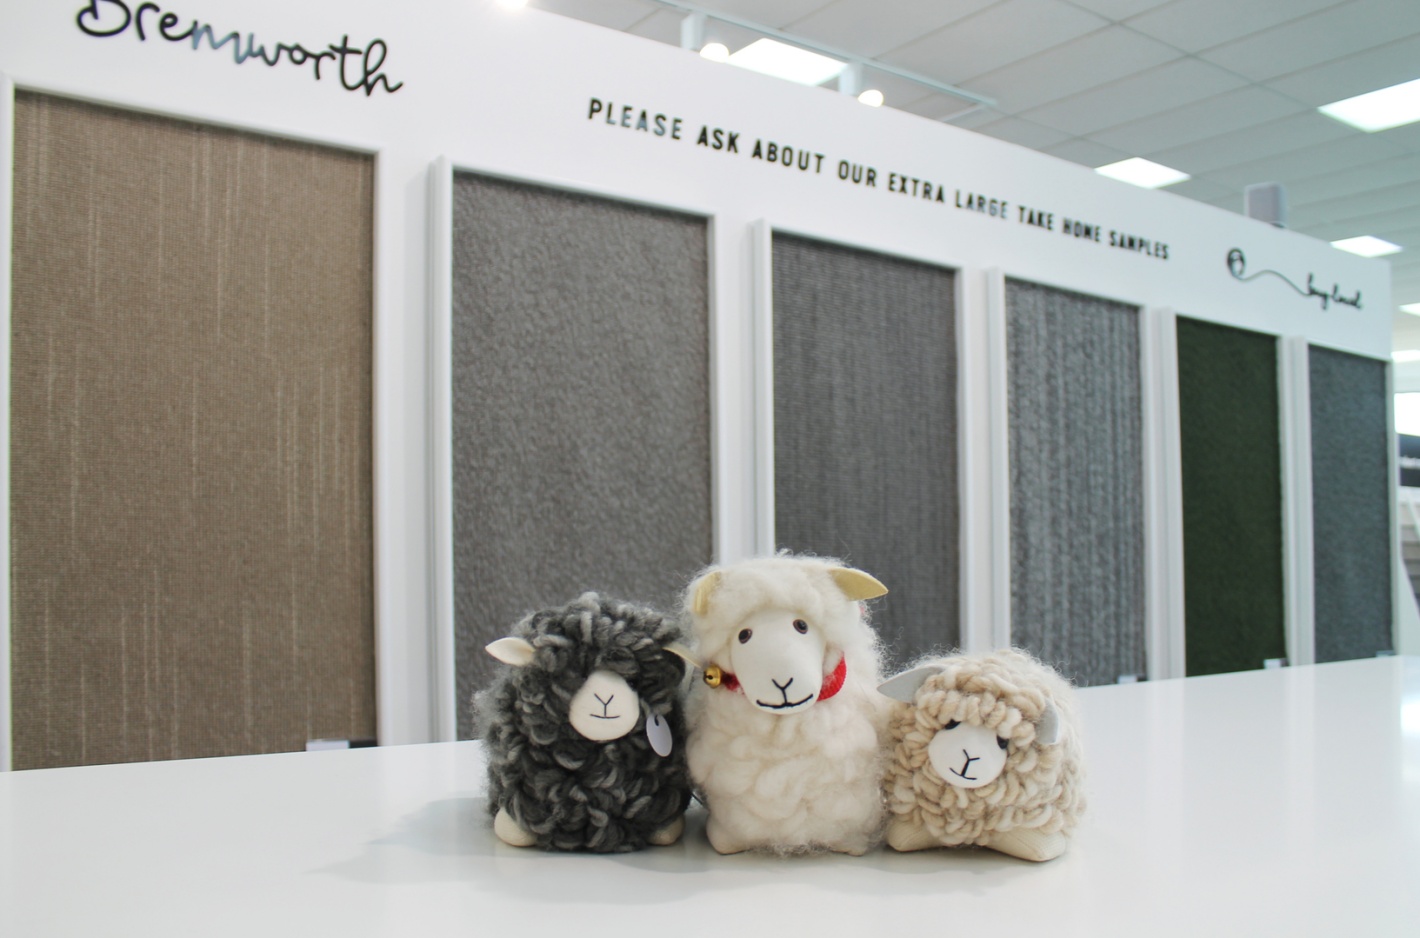 Bremworth Wool Sheep pose with carpet samples